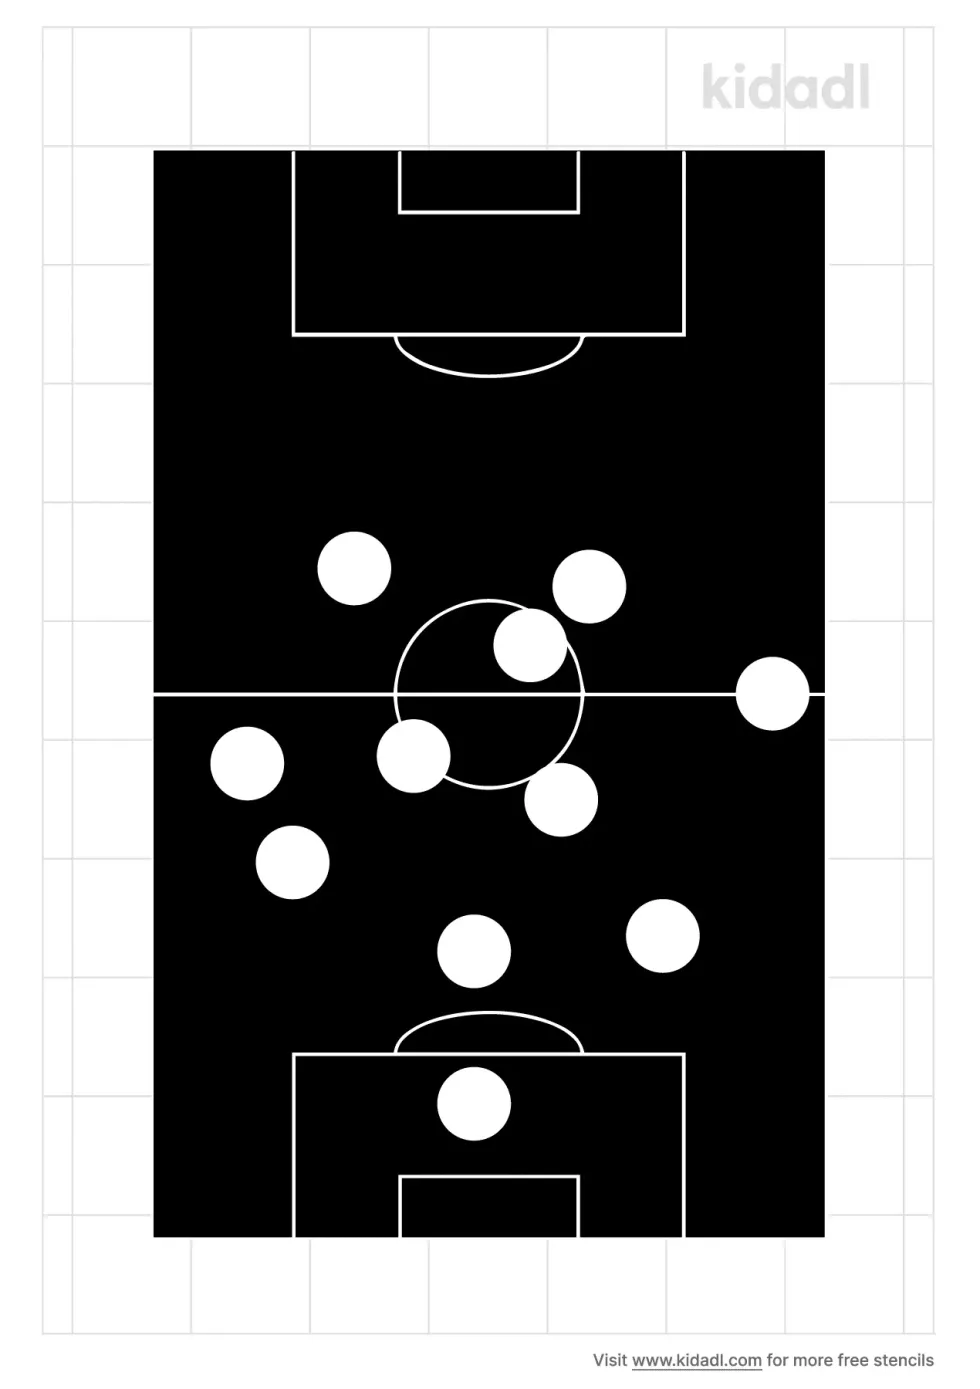 Football Formation